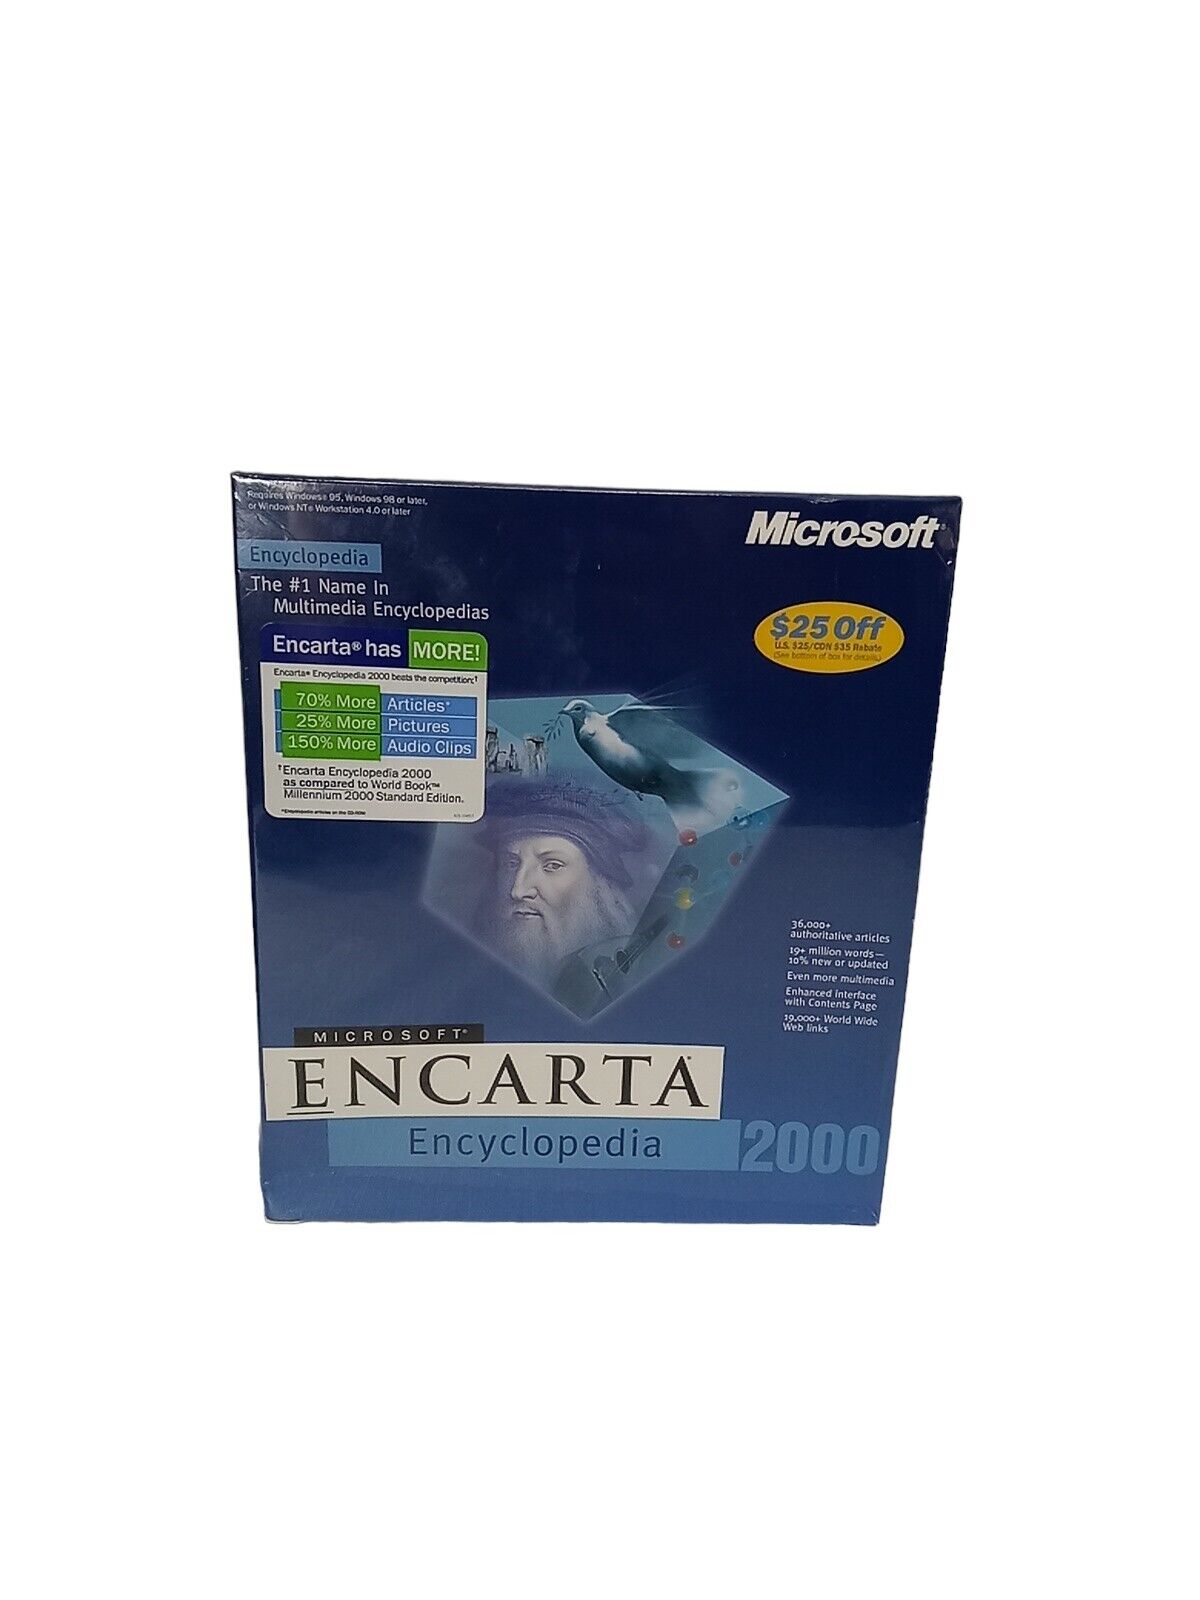 GENUINE Microsoft ENCARTA Multimedia Encyclopedia 2000 SOFTWARE Windows 95/98 NT